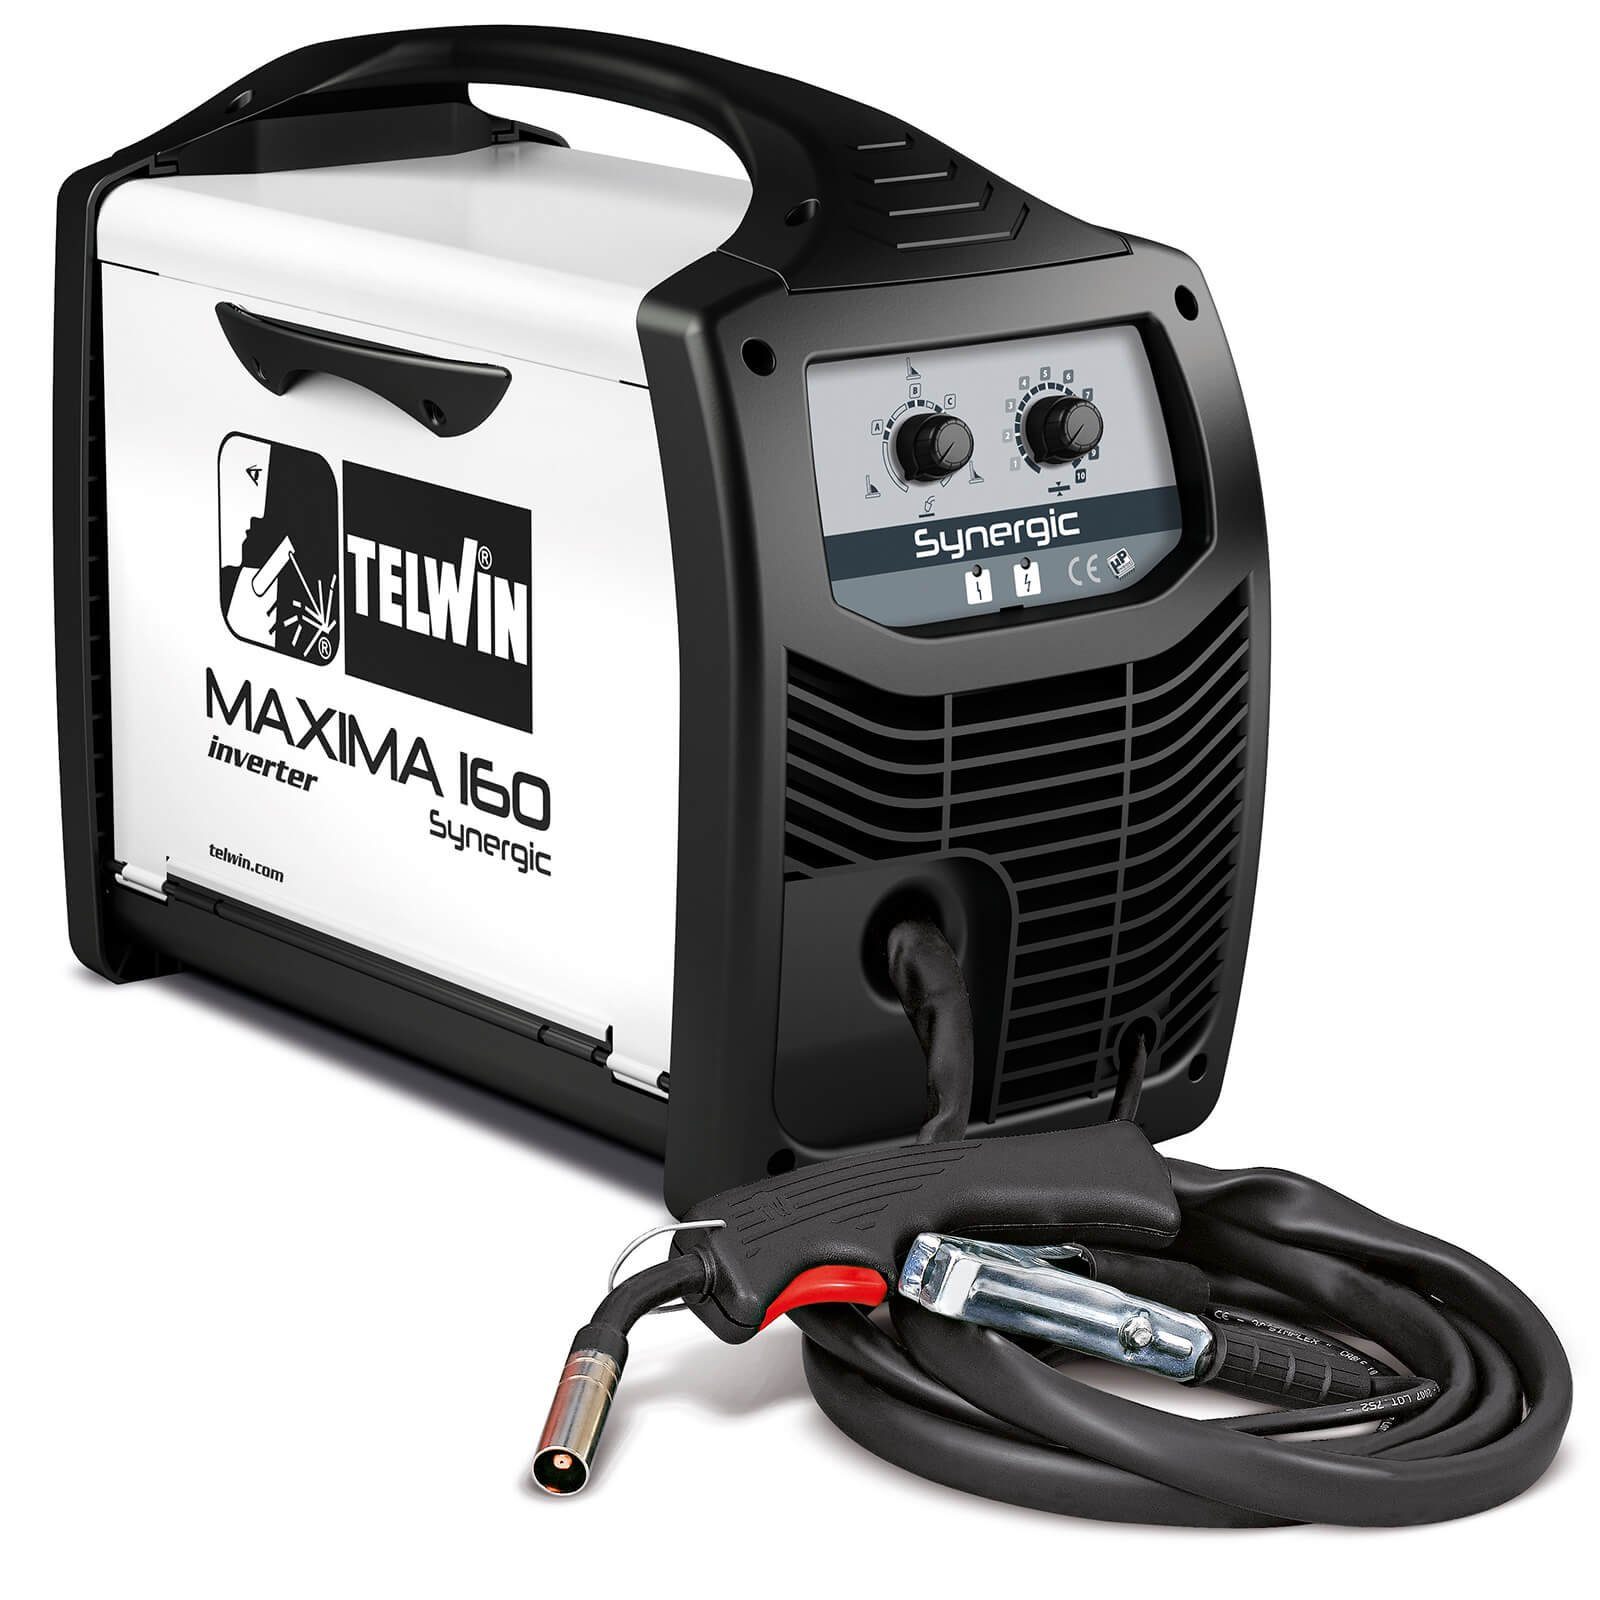 TELWIN Elektroschweißgerät Telwin Elements MAXIMA 160 SYNERGIC Schutzgas Schweißgerät 150A | Schweißgeräte